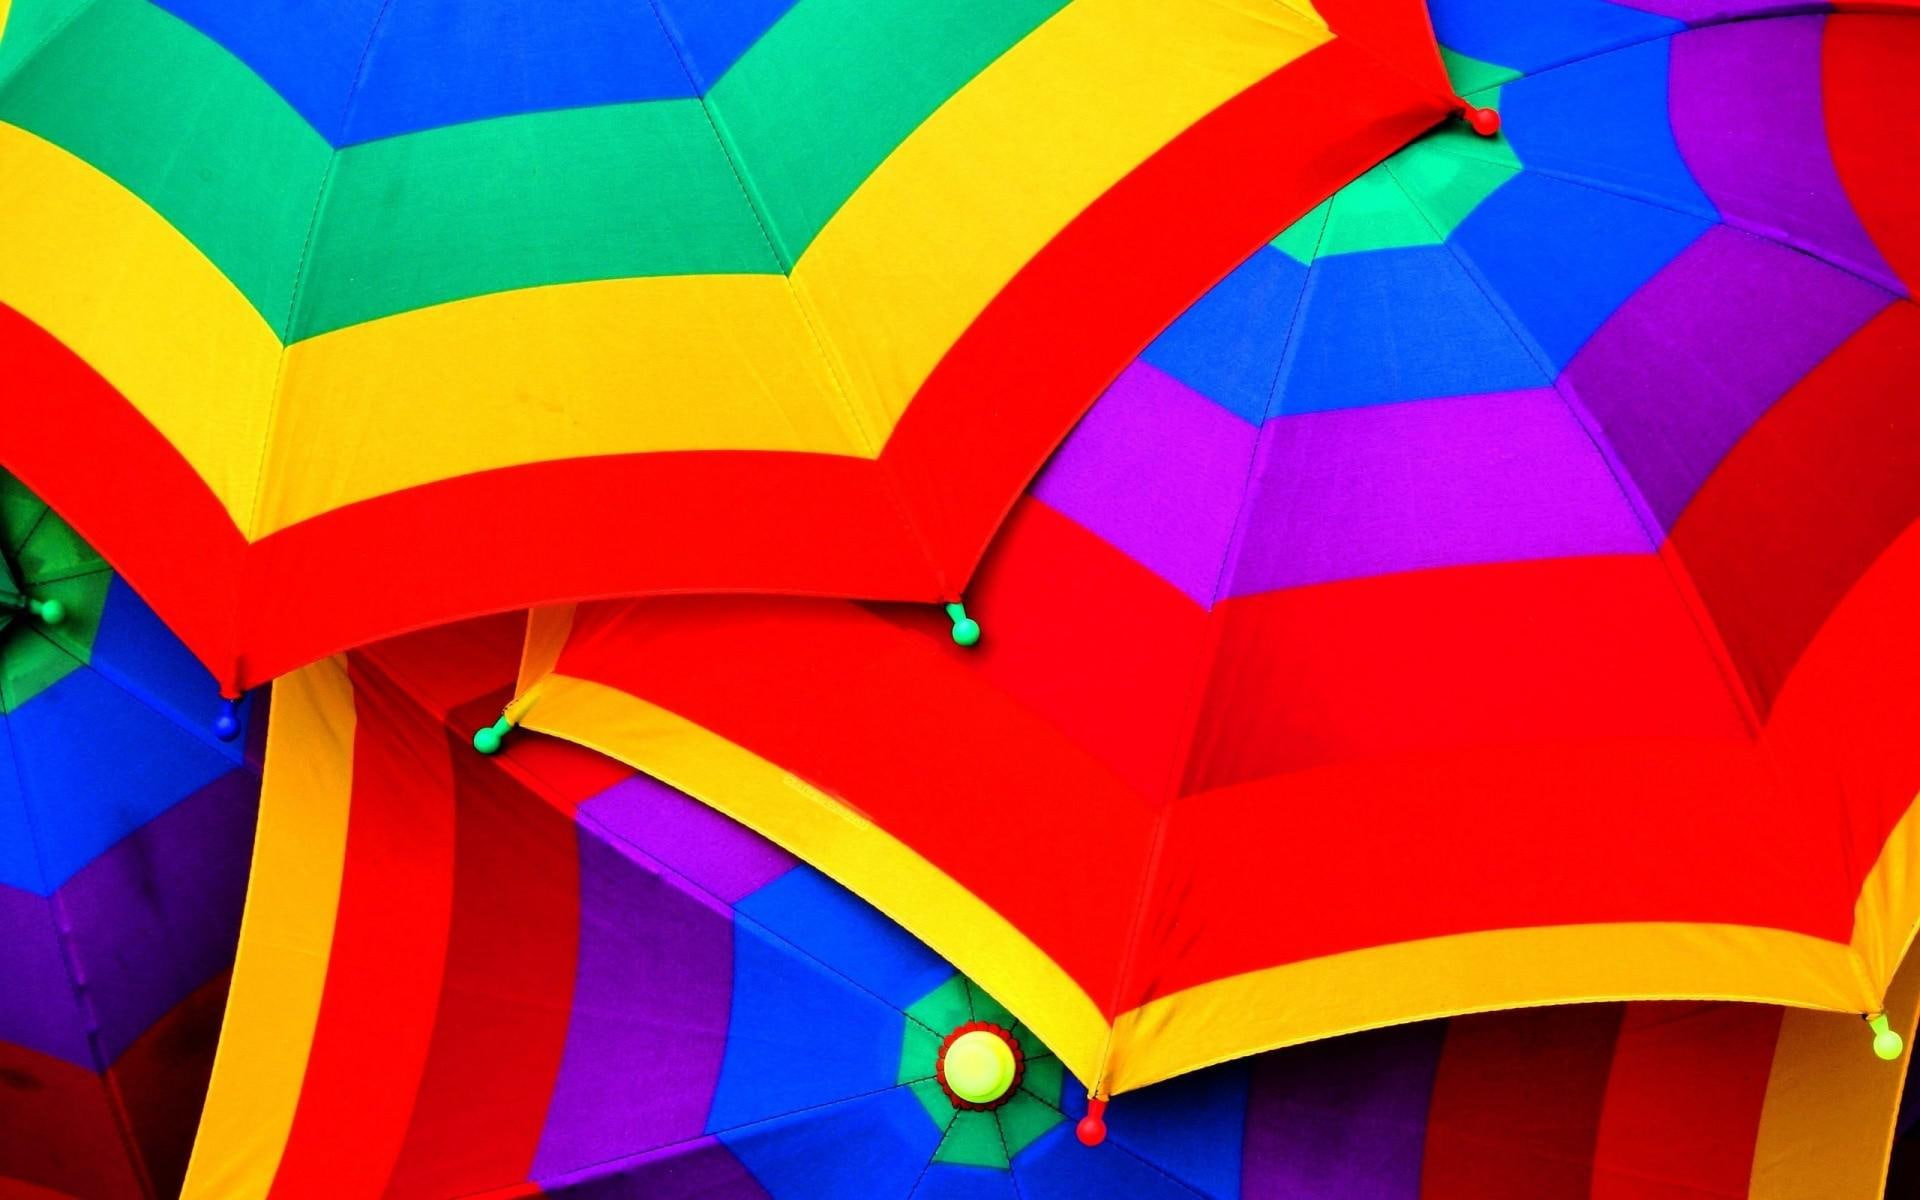 Rainbow umbrellas, blue purple red and yellow umbrellas, photography